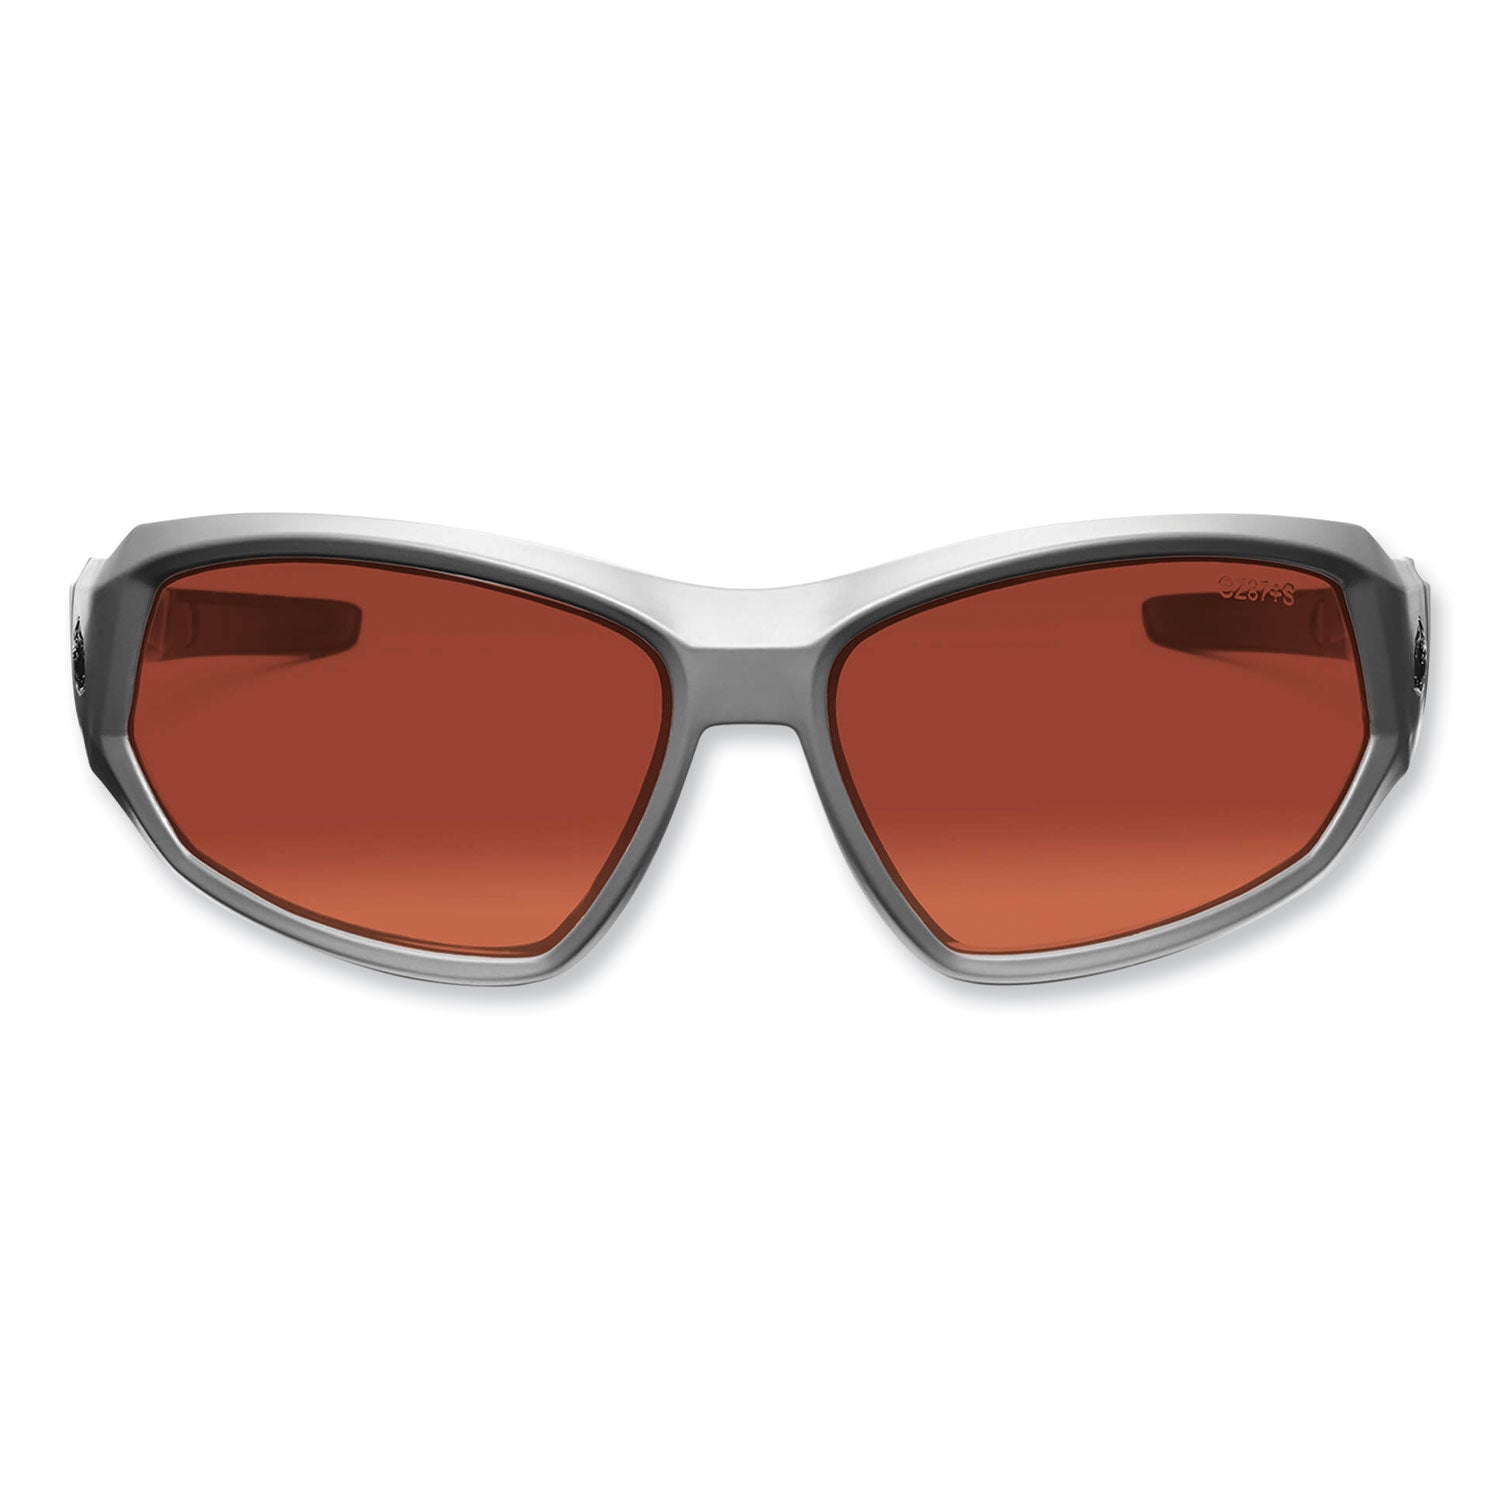 skullerz-loki-safety-glasses-goggles-gray-nylon-impact-frame-polarized-copper-polycarb-lens-ships-in-1-3-business-days_ego56121 - 2